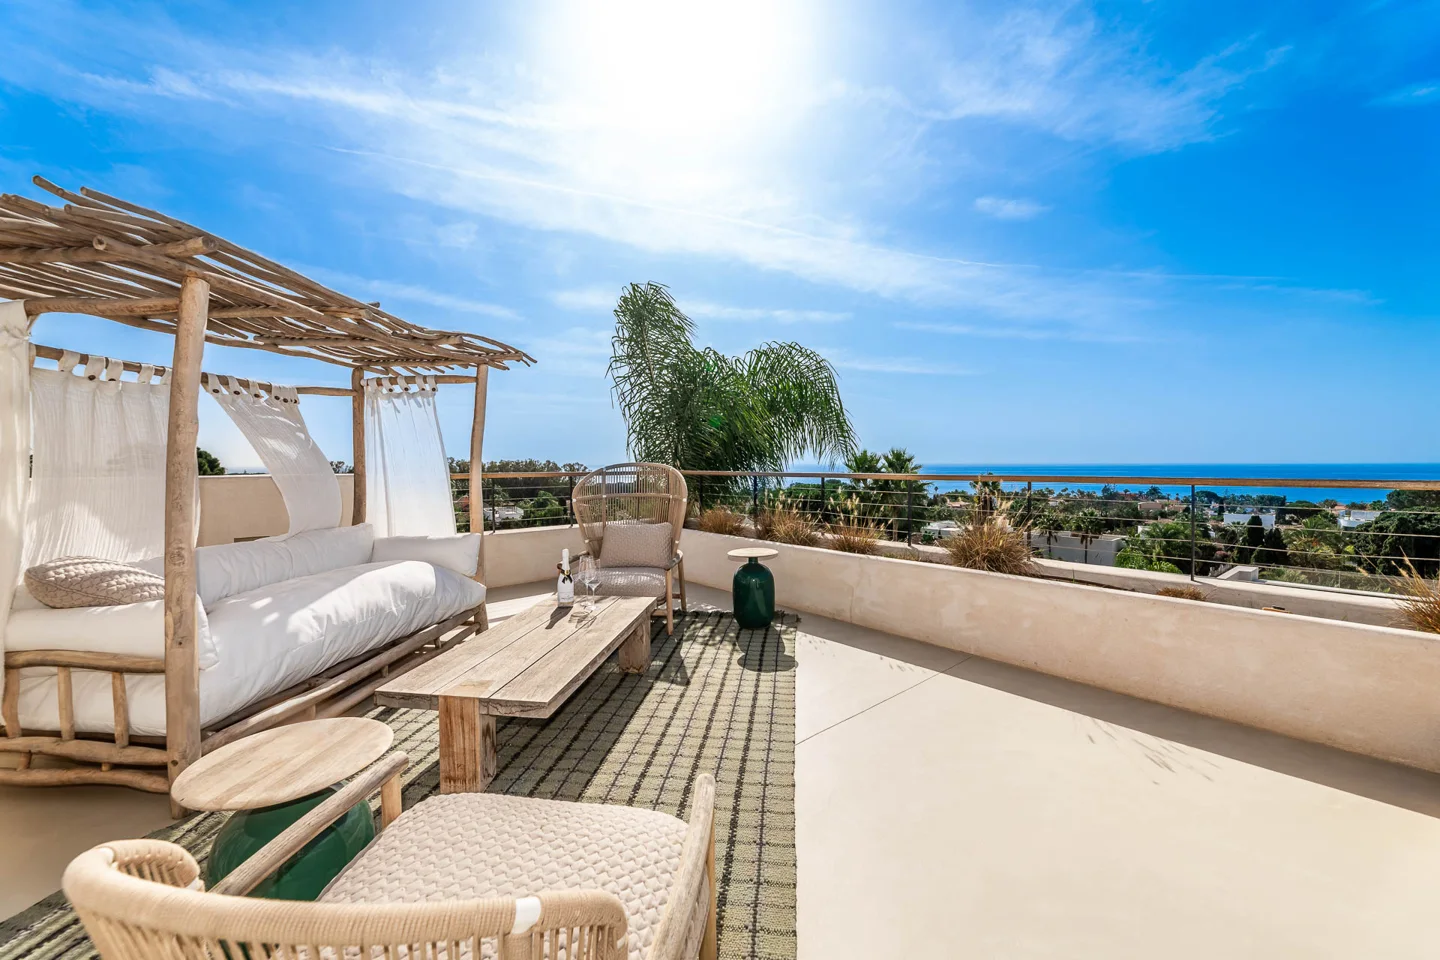 Marbesa: Outstanding Mediterranean style villa beachside